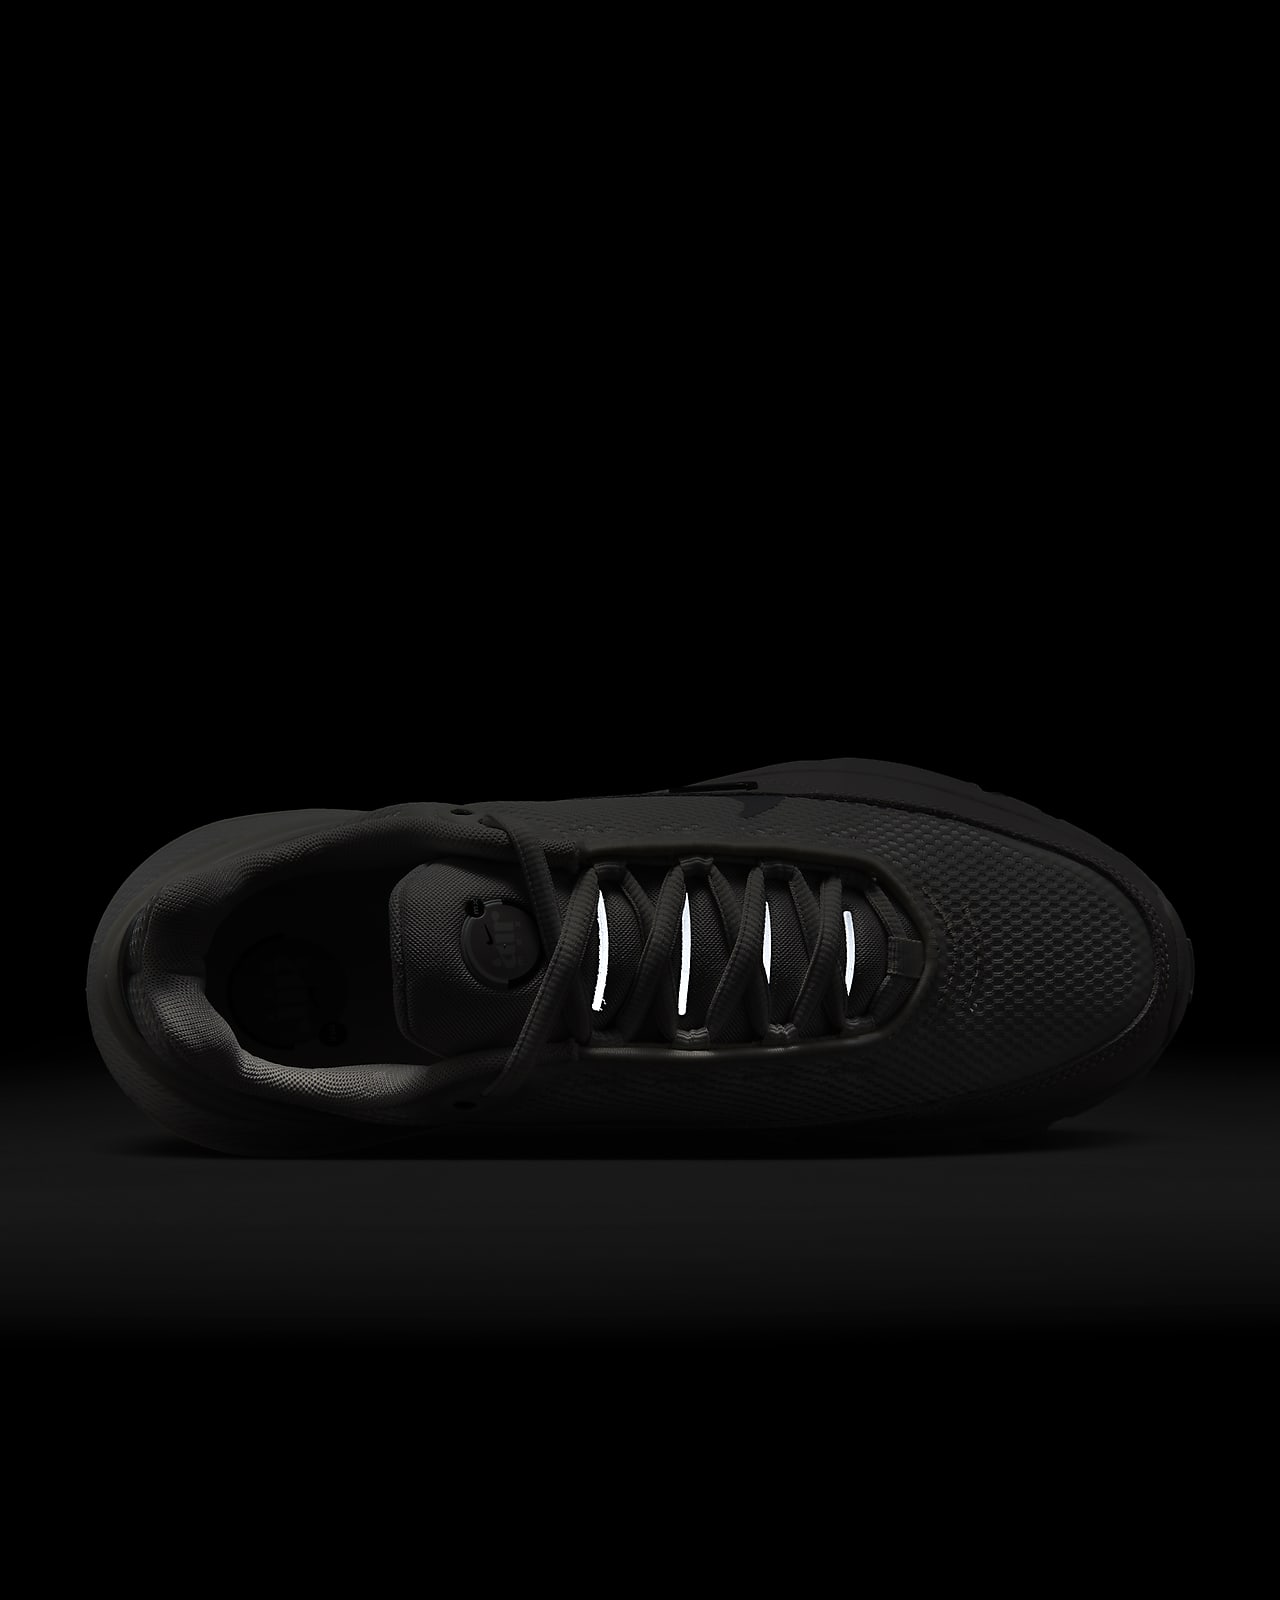 Nike Men's Air Max 2090 Triple White Casual Shoes